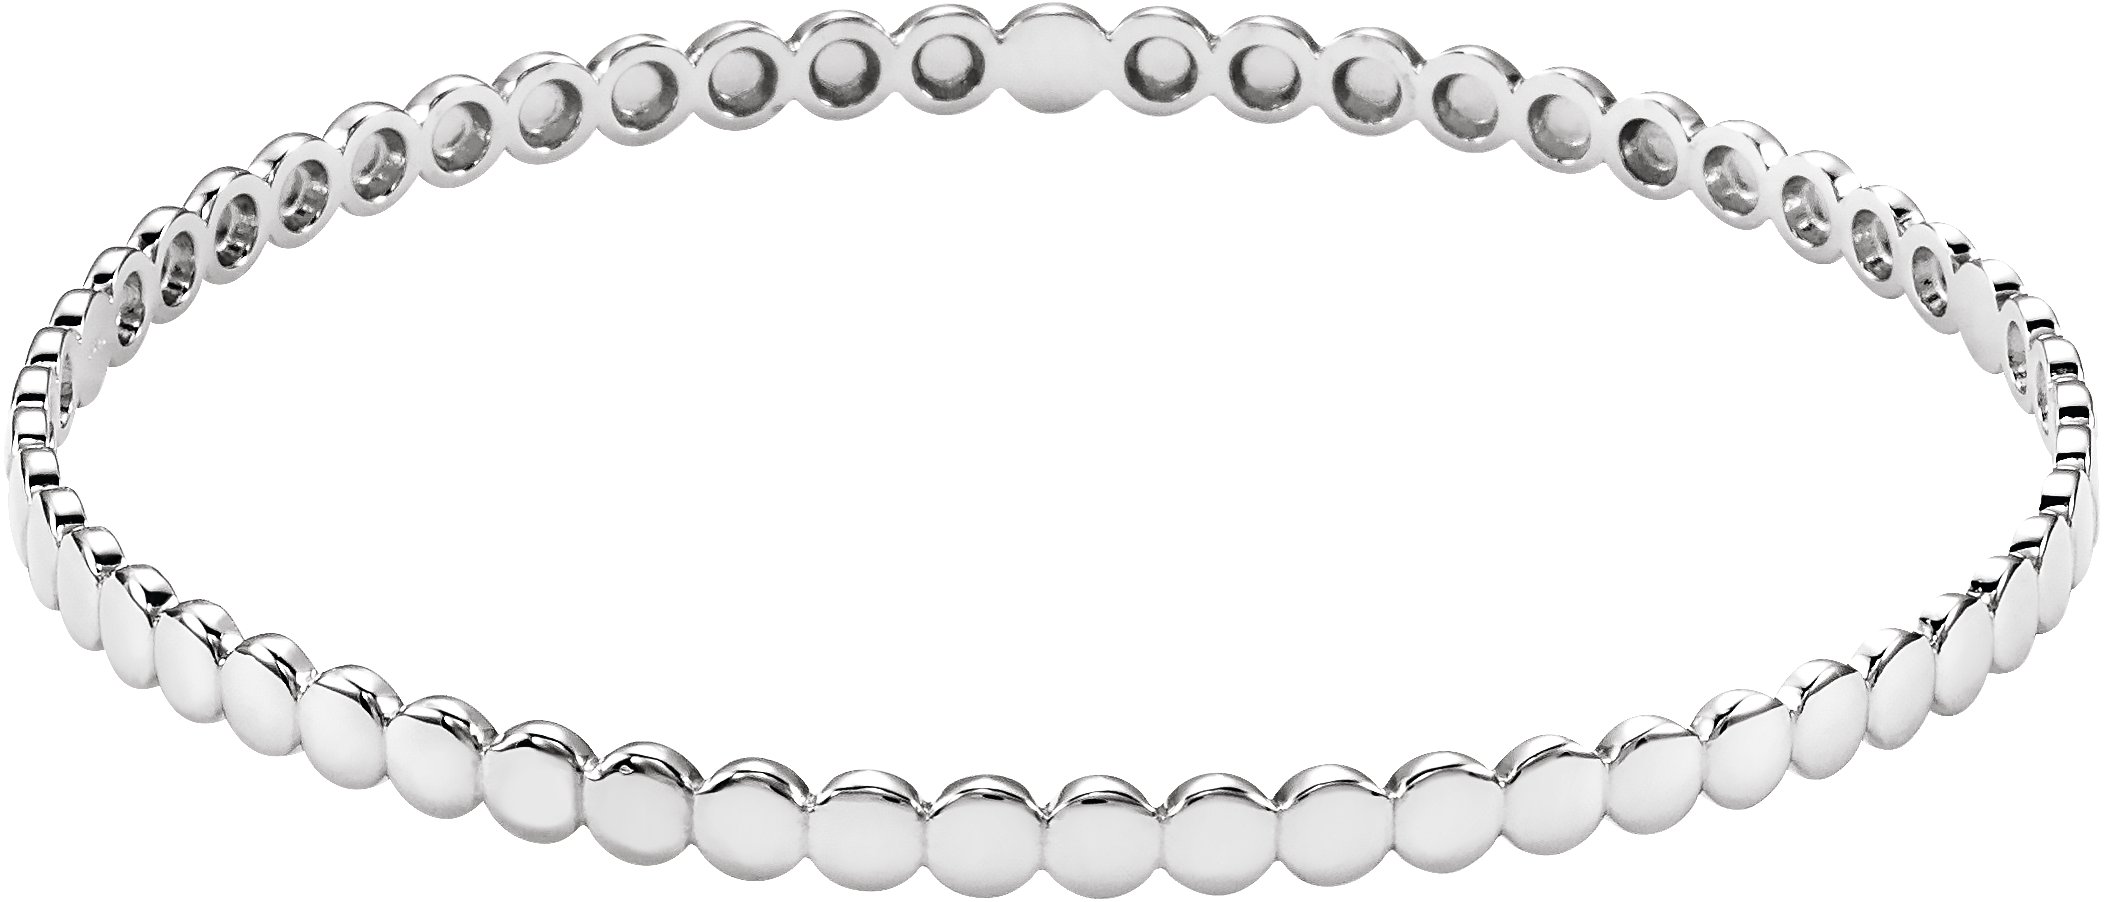 Sterling Silver Bangle 7 3/4" Bracelet